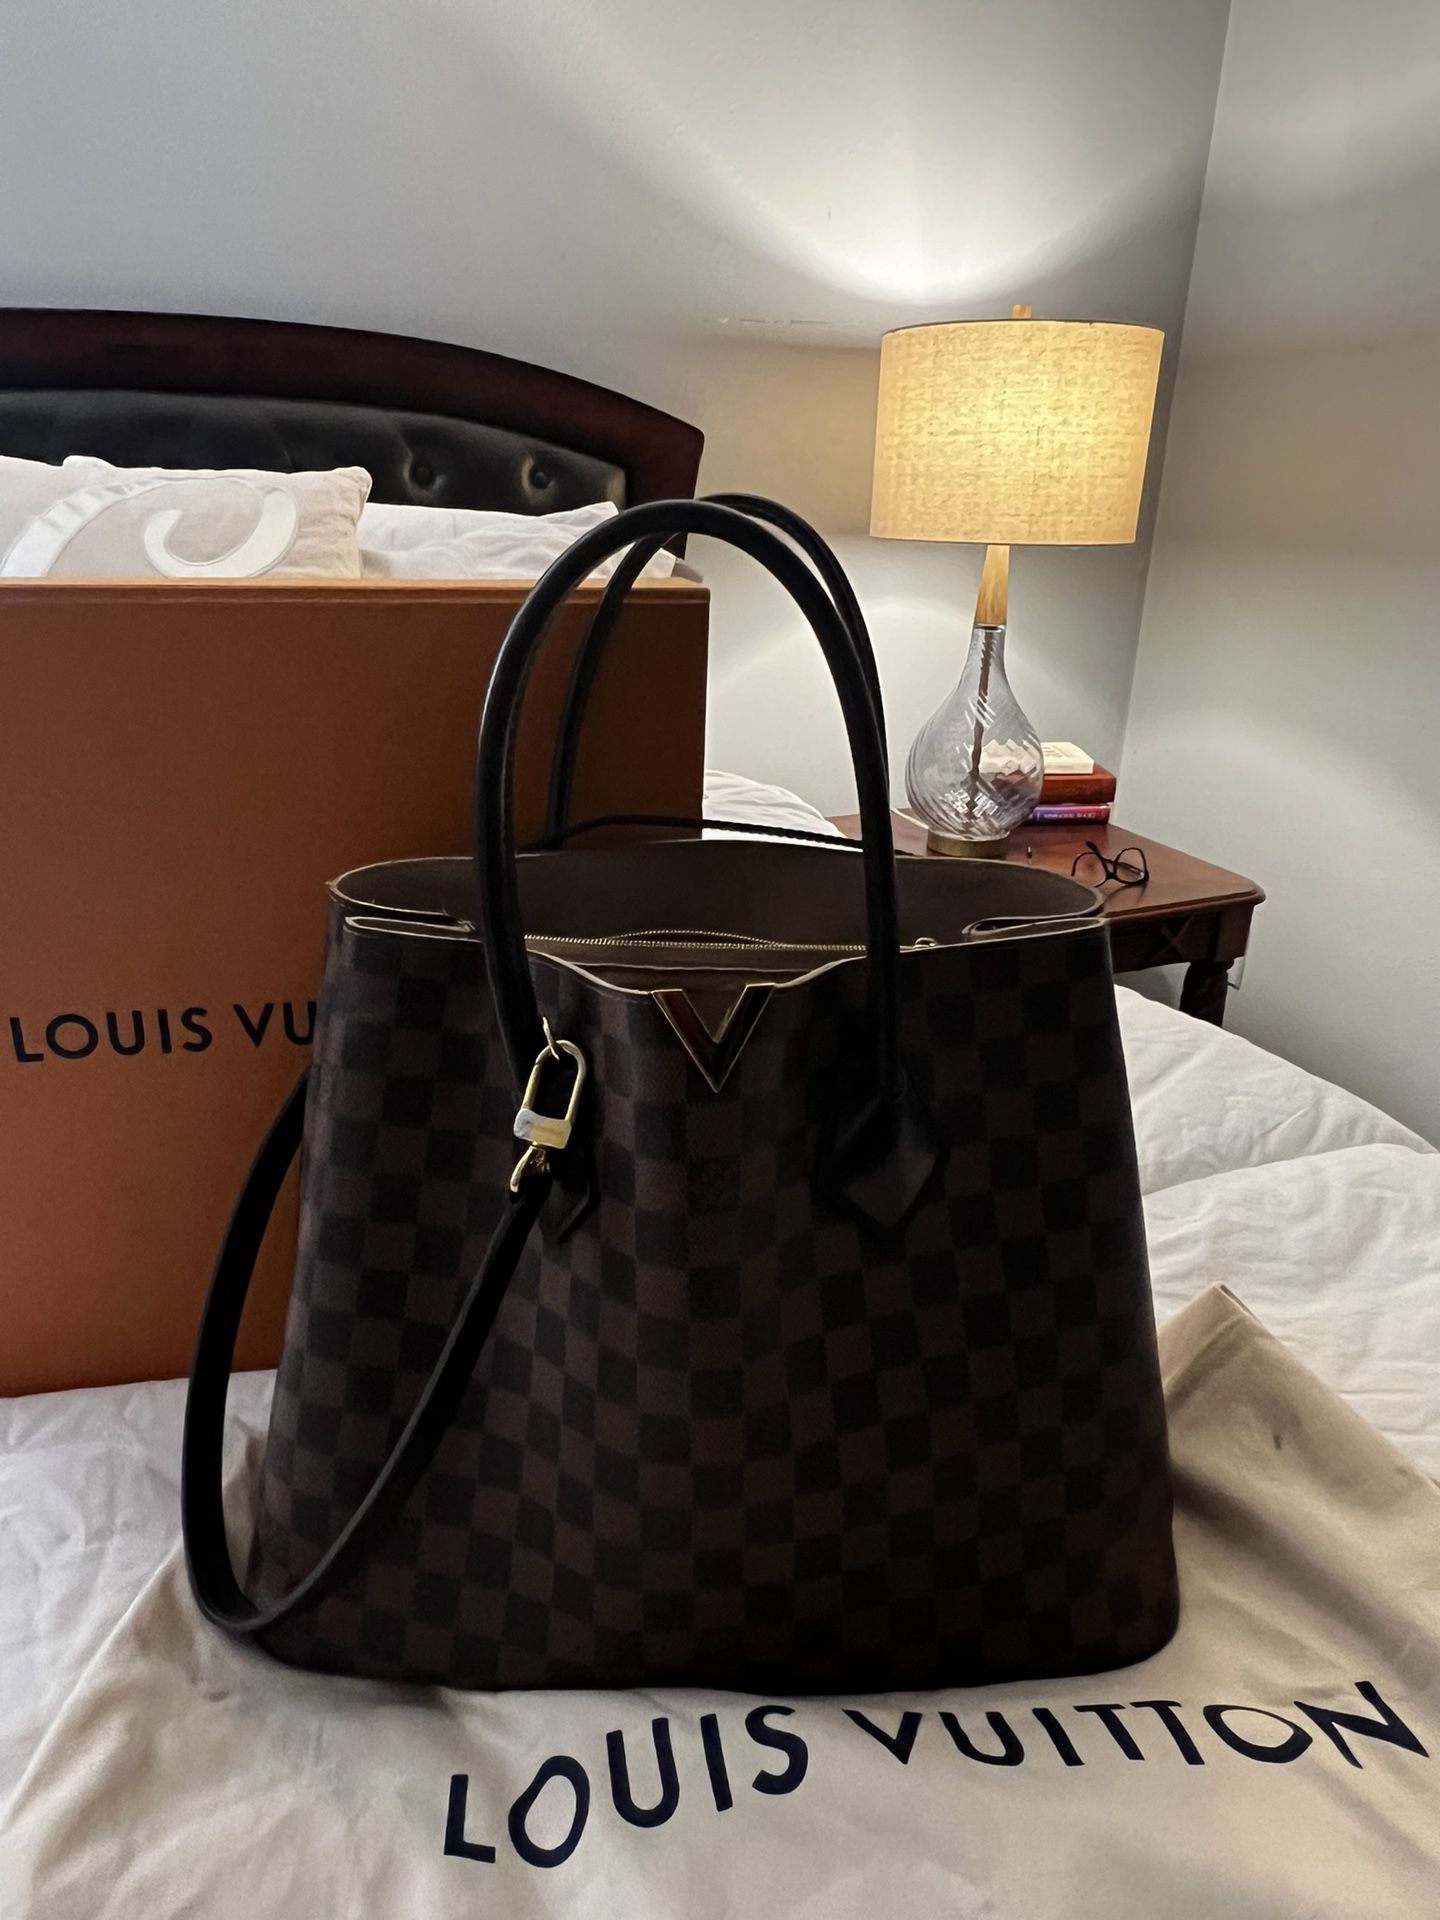 Louis Vuitton Kensington Bag - Authentic for Sale in Alamo Heights